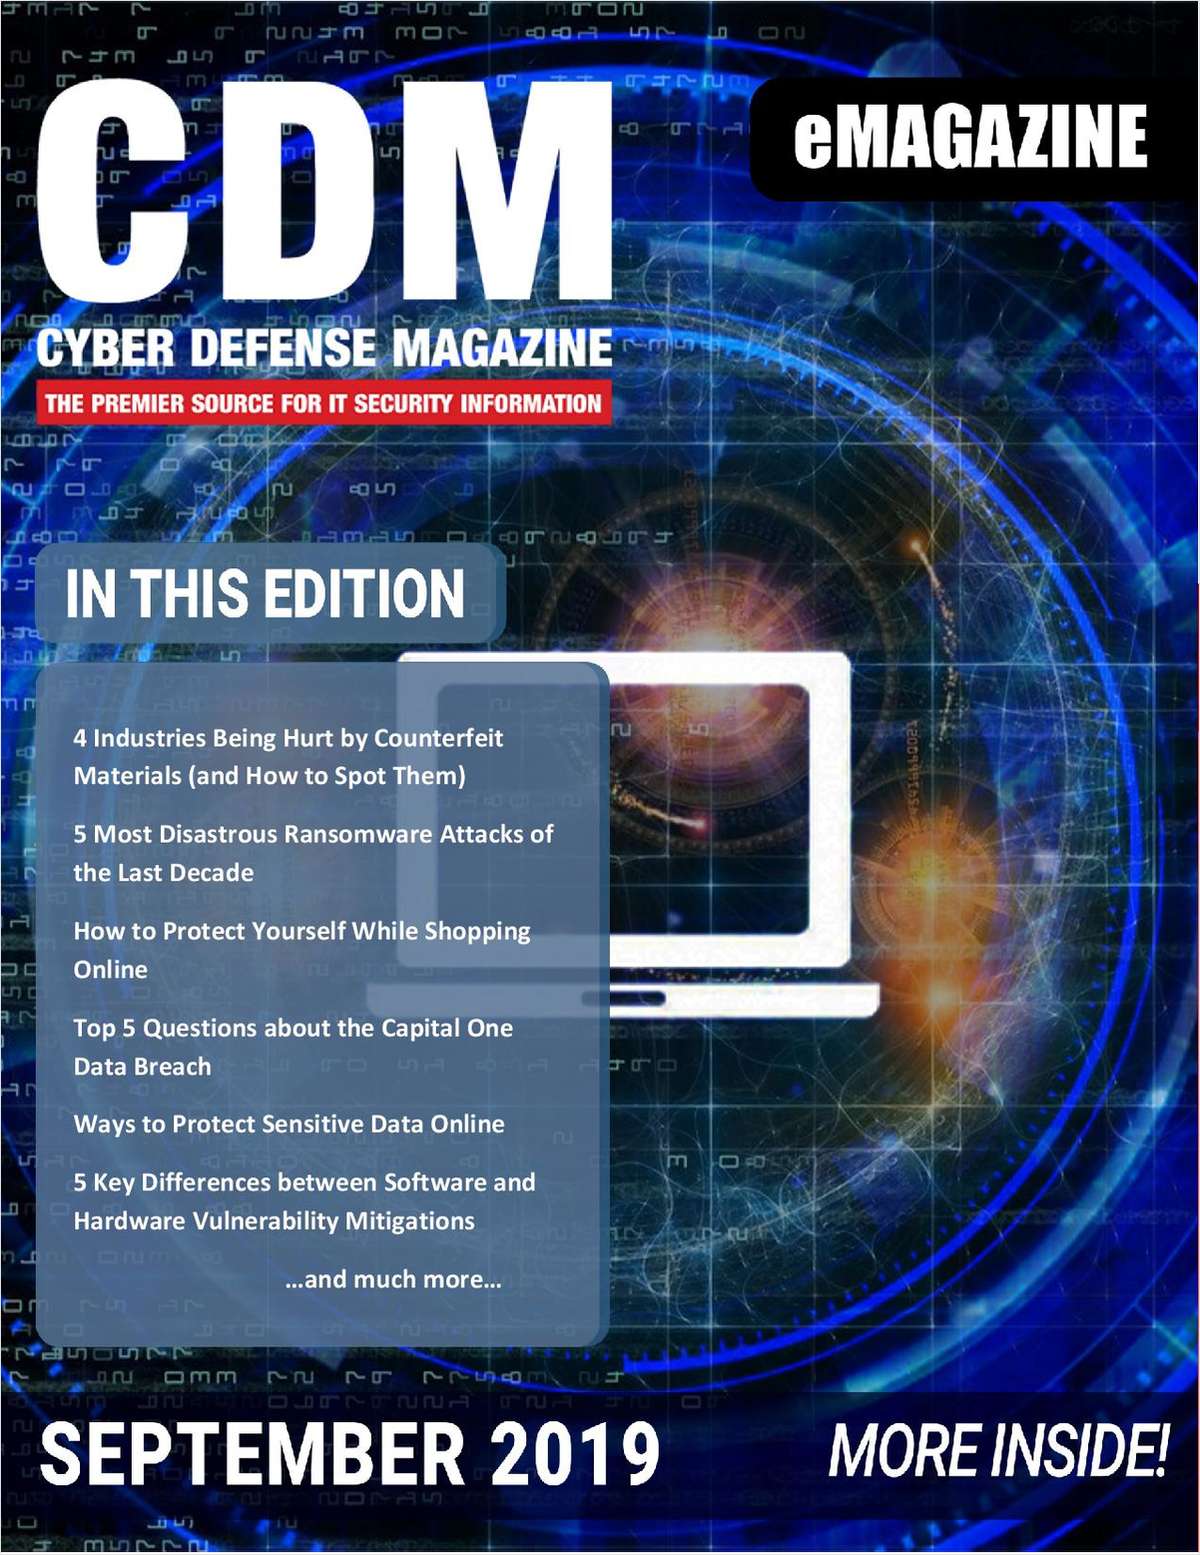 Cyber Defense eMagazine - September 2019 Edition